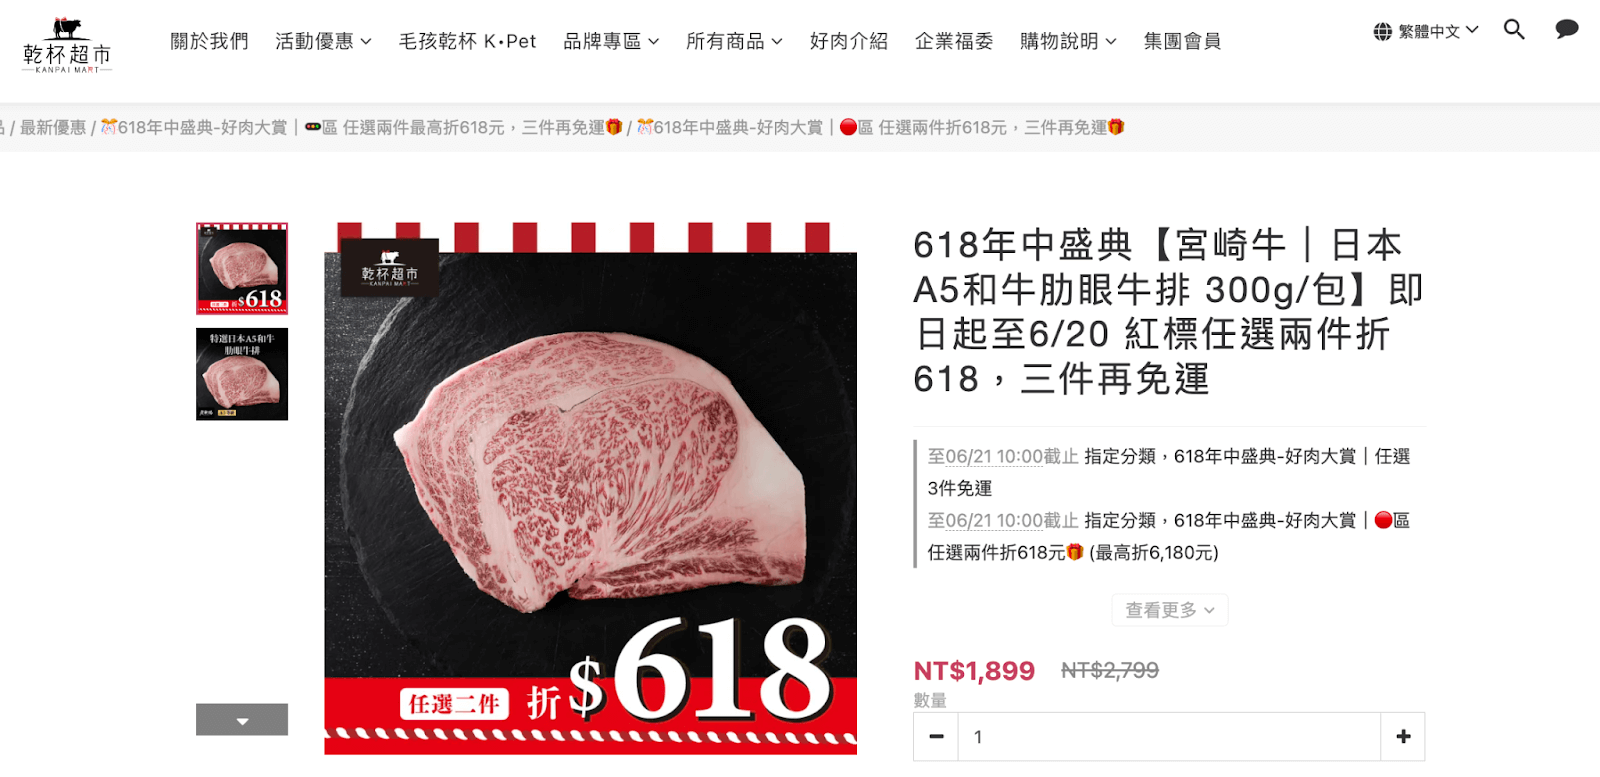 SHOPLINE 廣告店家《 乾杯超市 》推出日本 A5 和牛任兩件折 $618 的活動